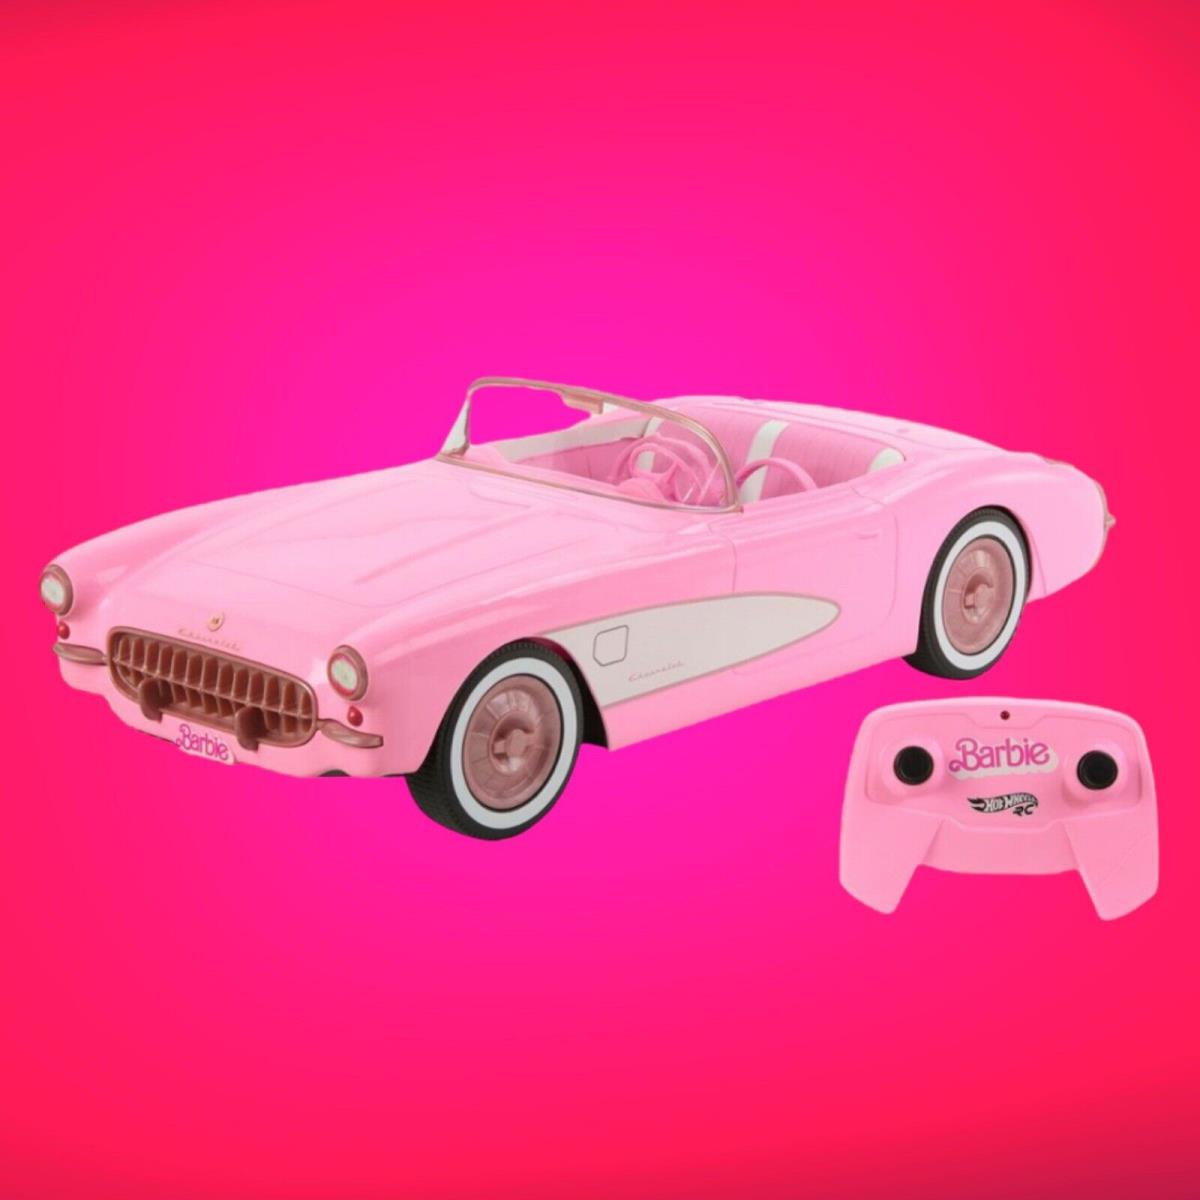 Mattel Hot Wheels Barbie Movie Remote Control 1956 Corvette Stingray Car Pink